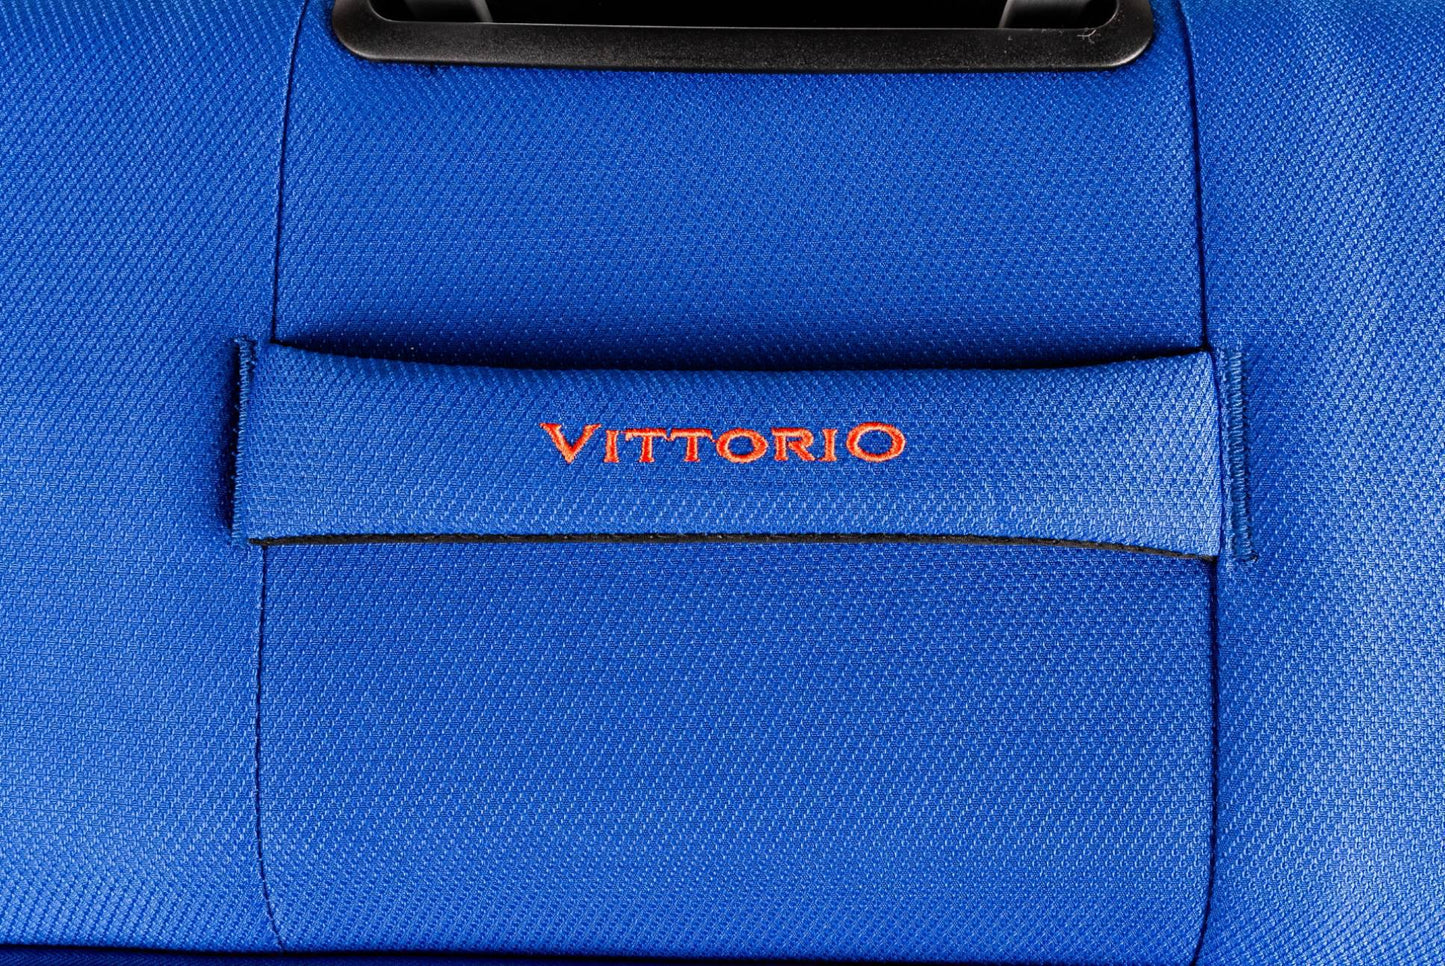 Vittorio E-Lite Softcase Spinner (SMALL)